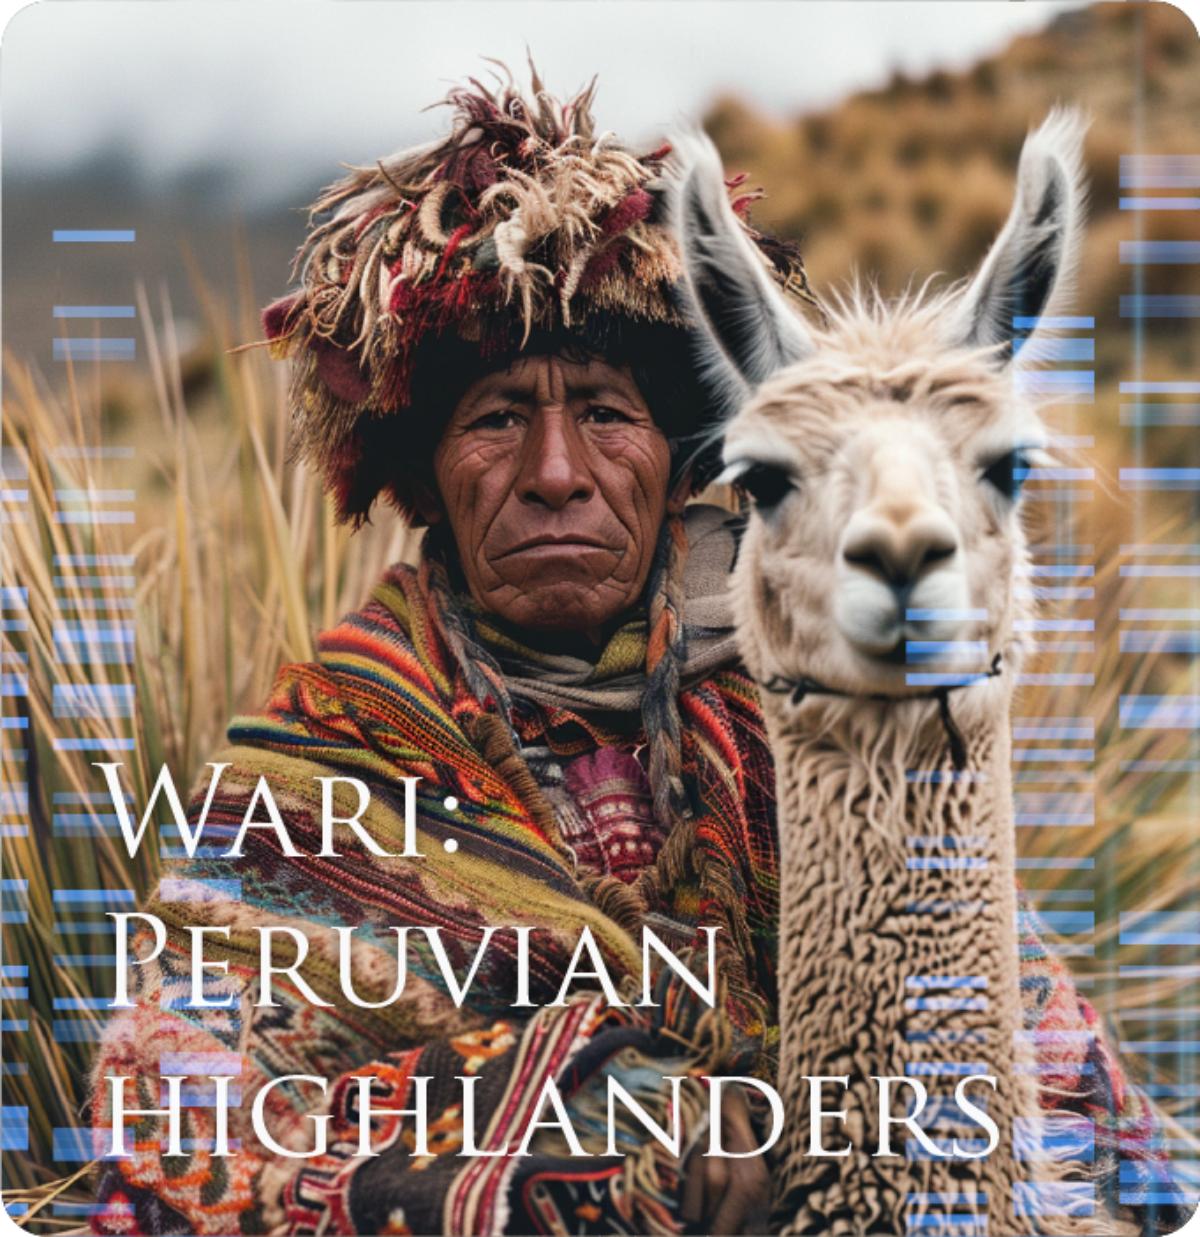 Wari Peruvian Highlanders